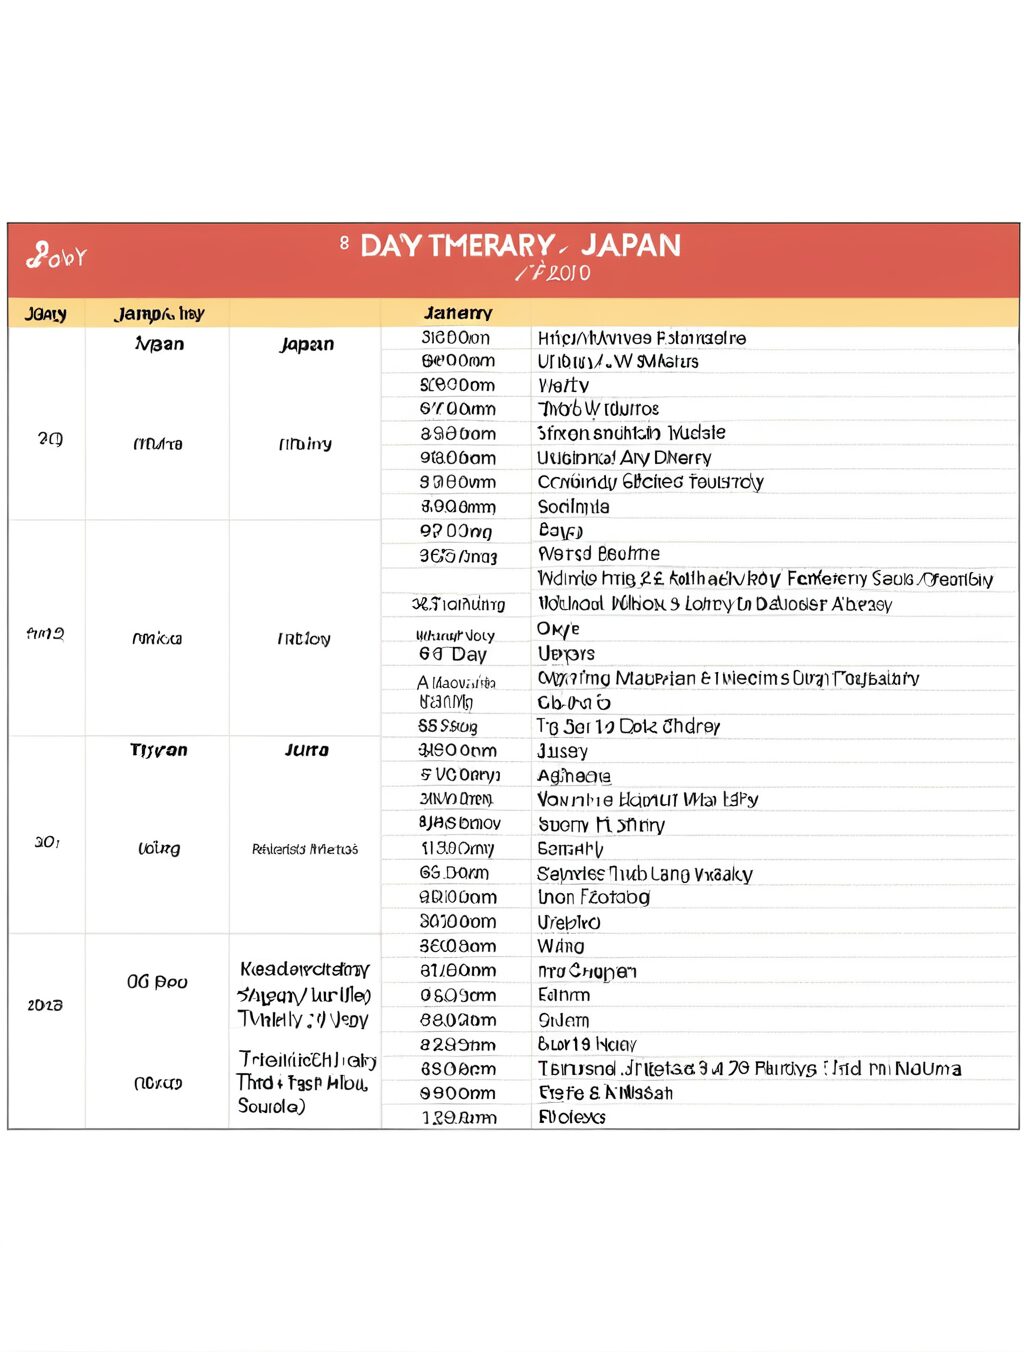 8 day itinerary japan